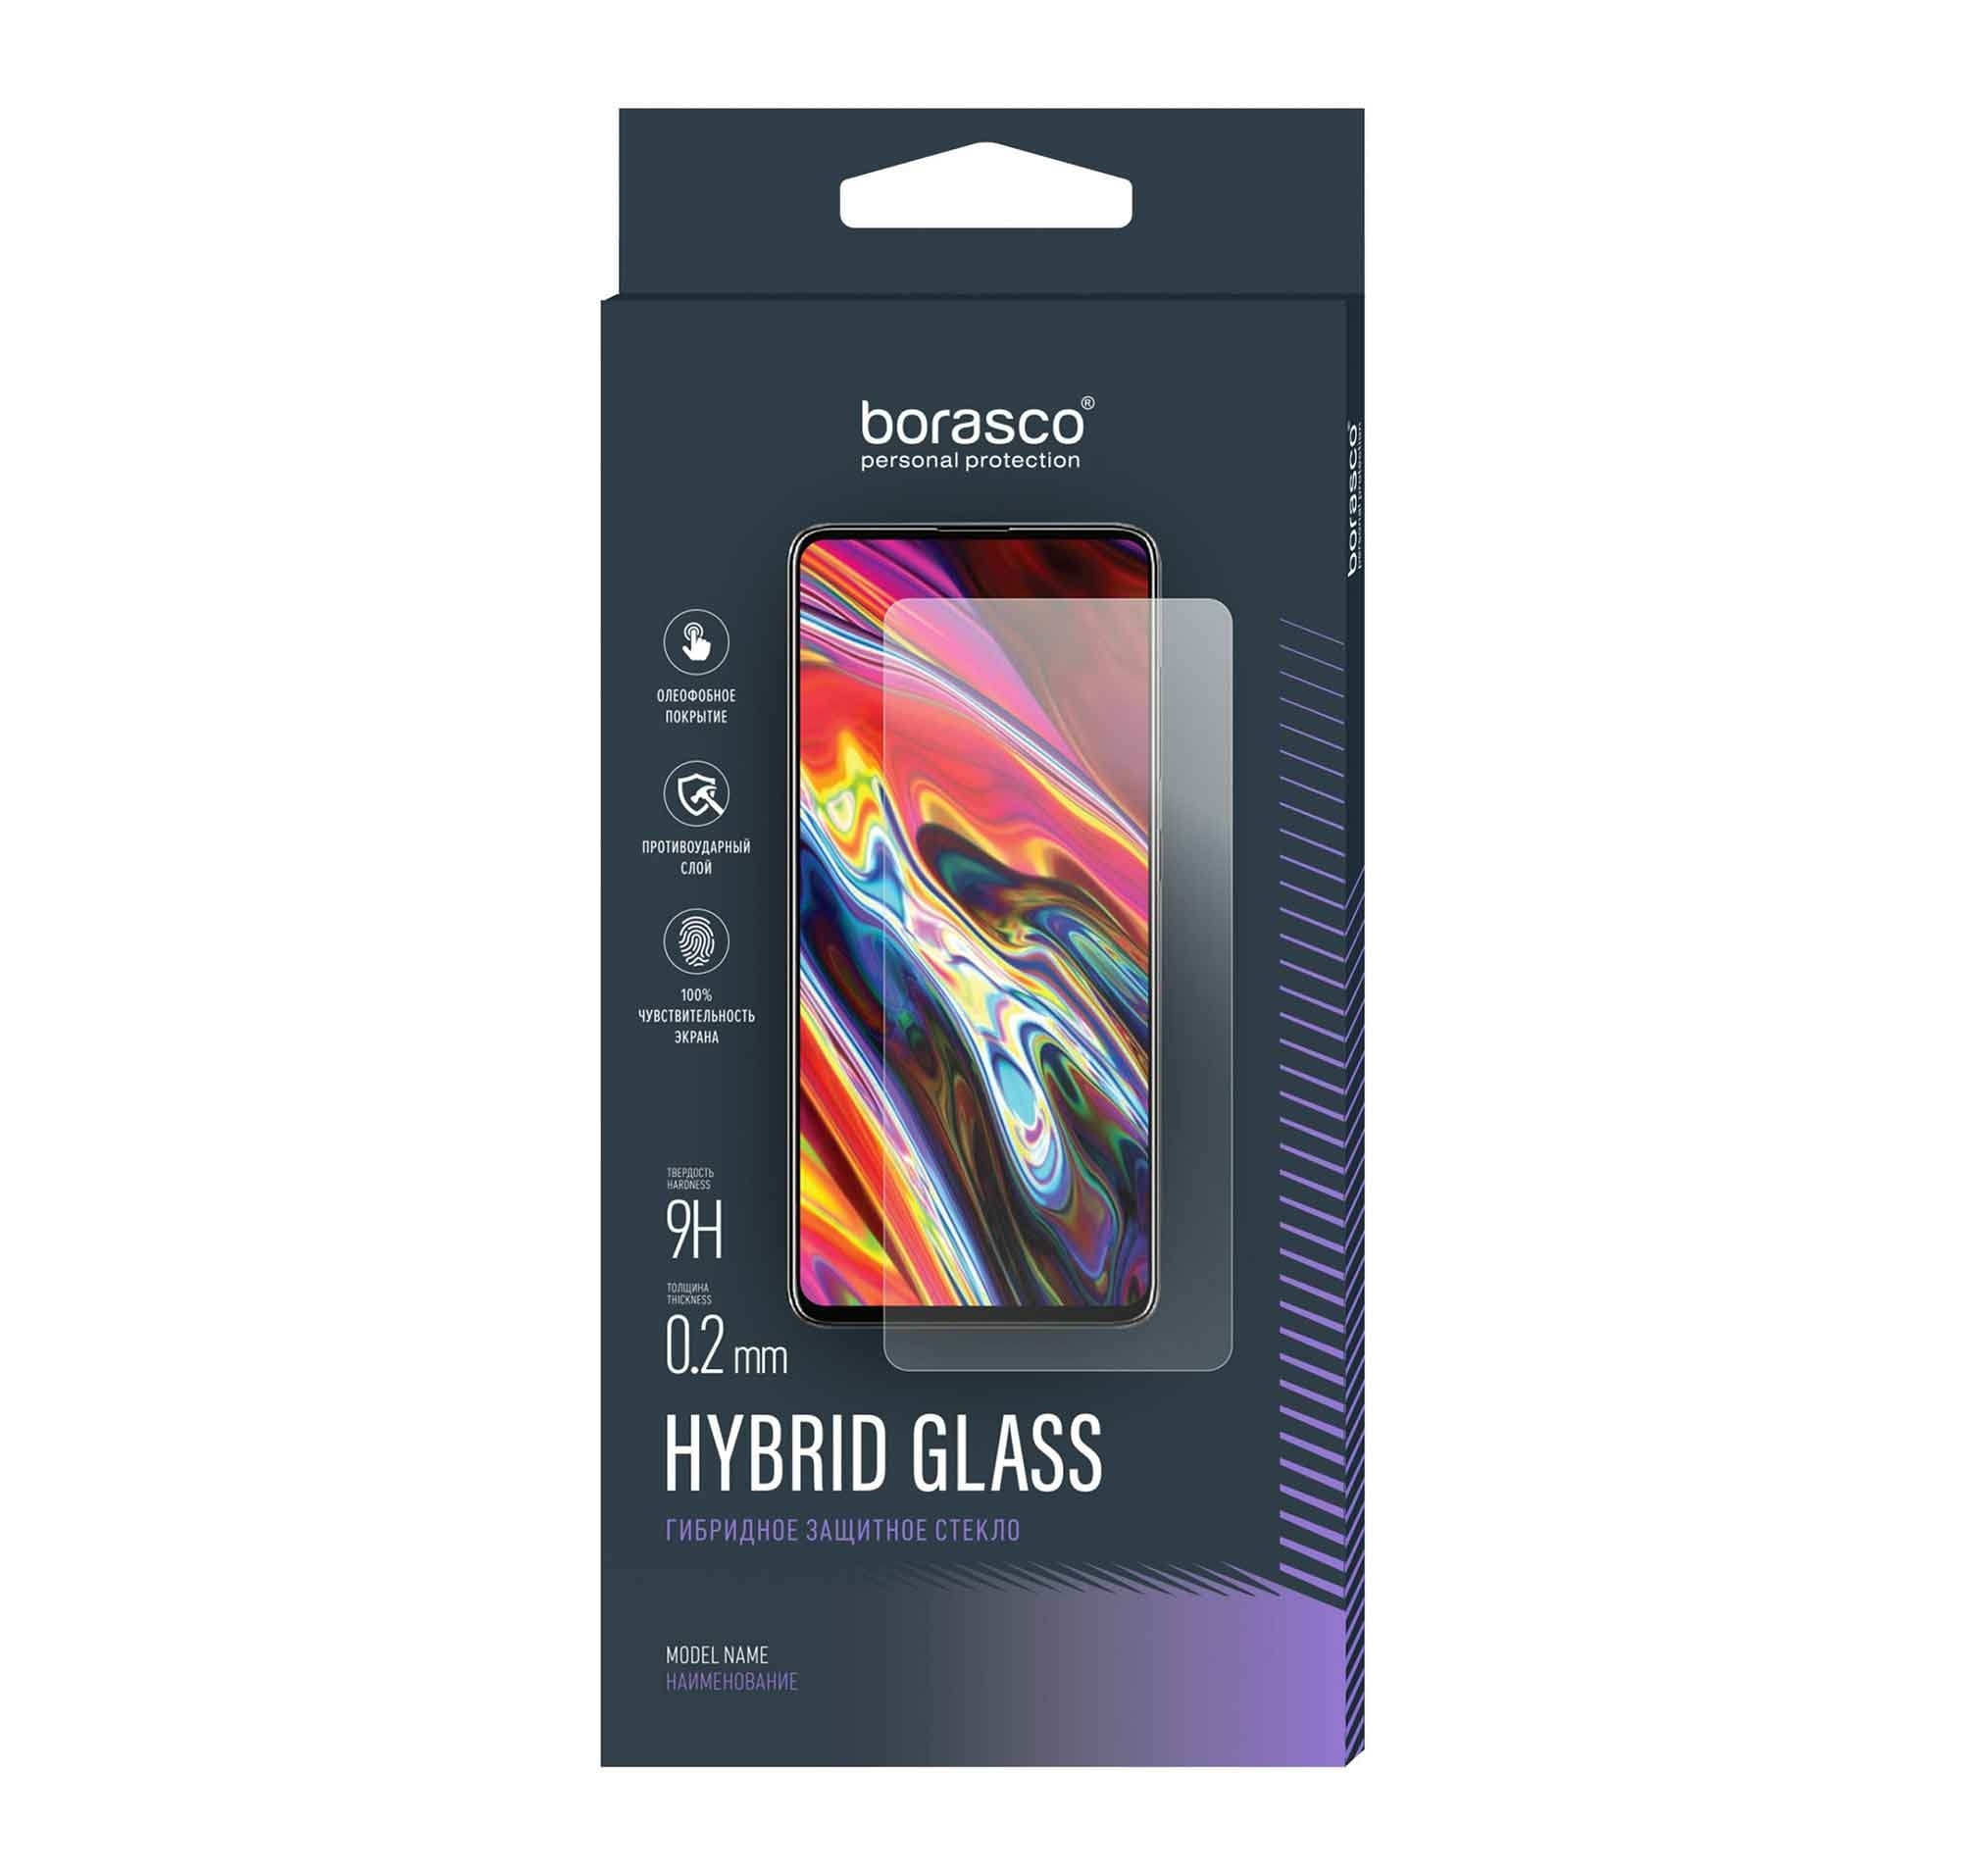 Стекло защитное BoraSCO Hybrid Glass для Oukitel F150 H2022 чехол mypads влюбленные барашки для oukitel f150 h2022 задняя панель накладка бампер